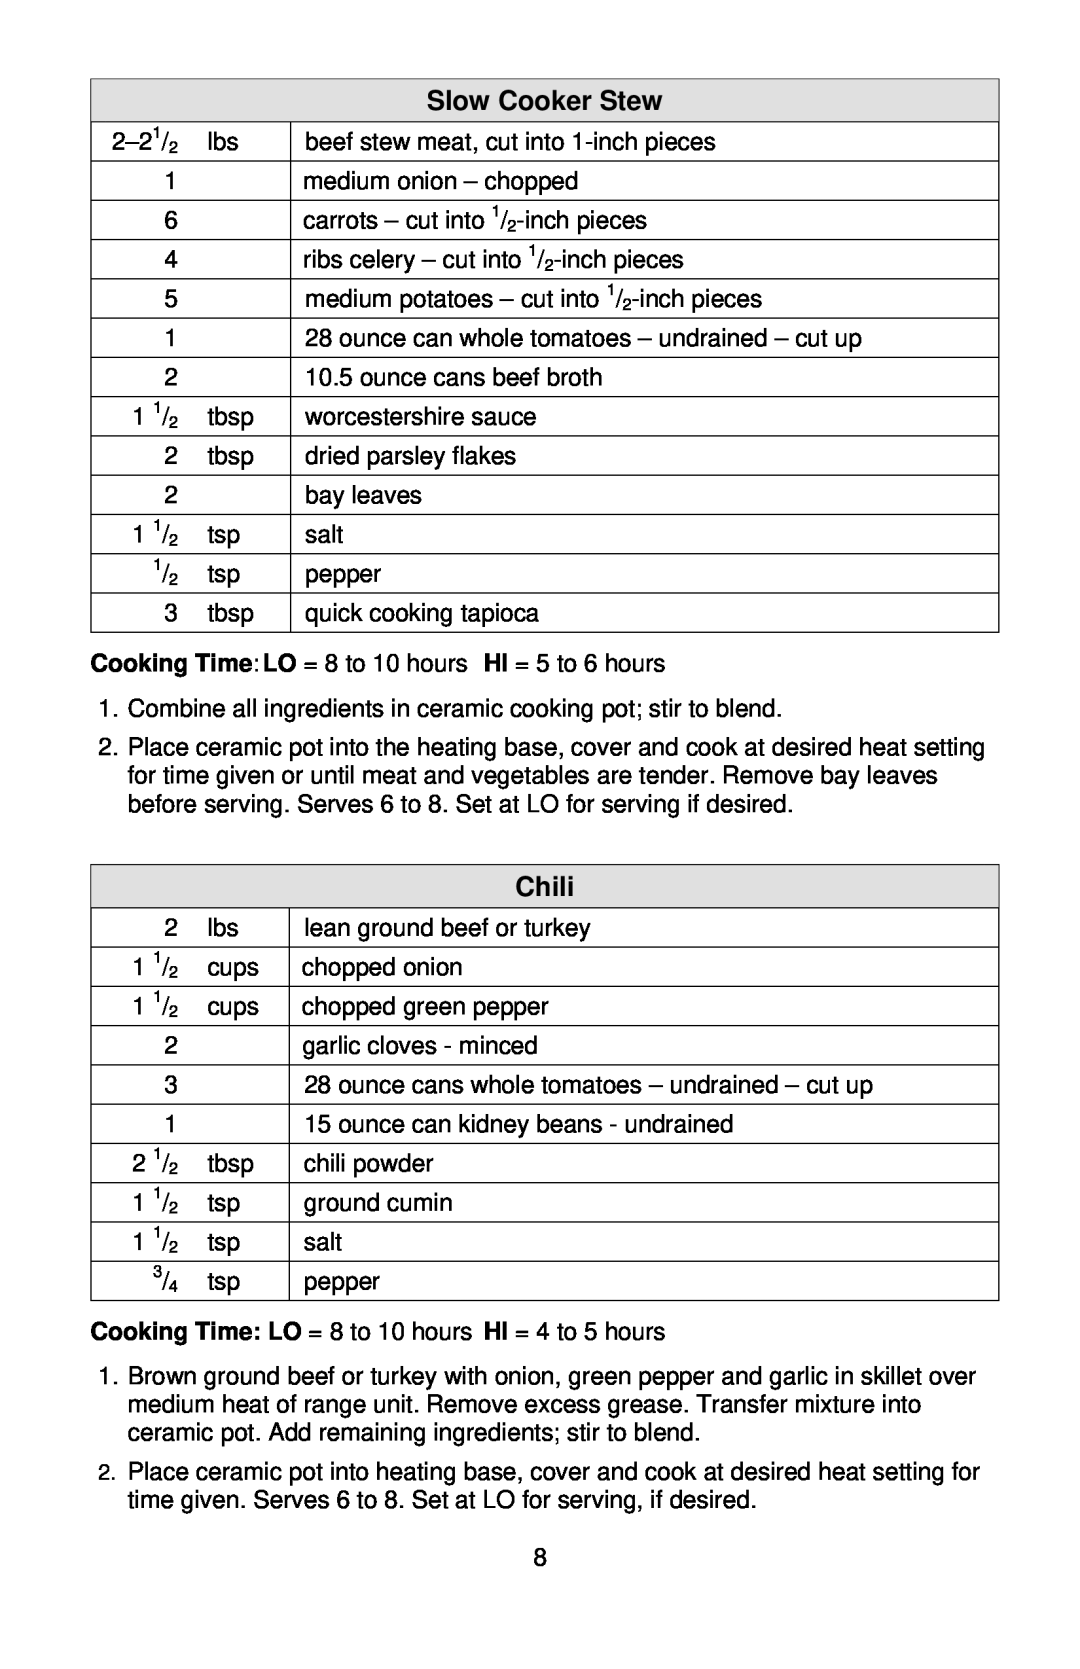 West Bend 6-QUART ELECTRONIC CROCKERYTM COOKER instruction manual Slow Cooker Stew, Chili 